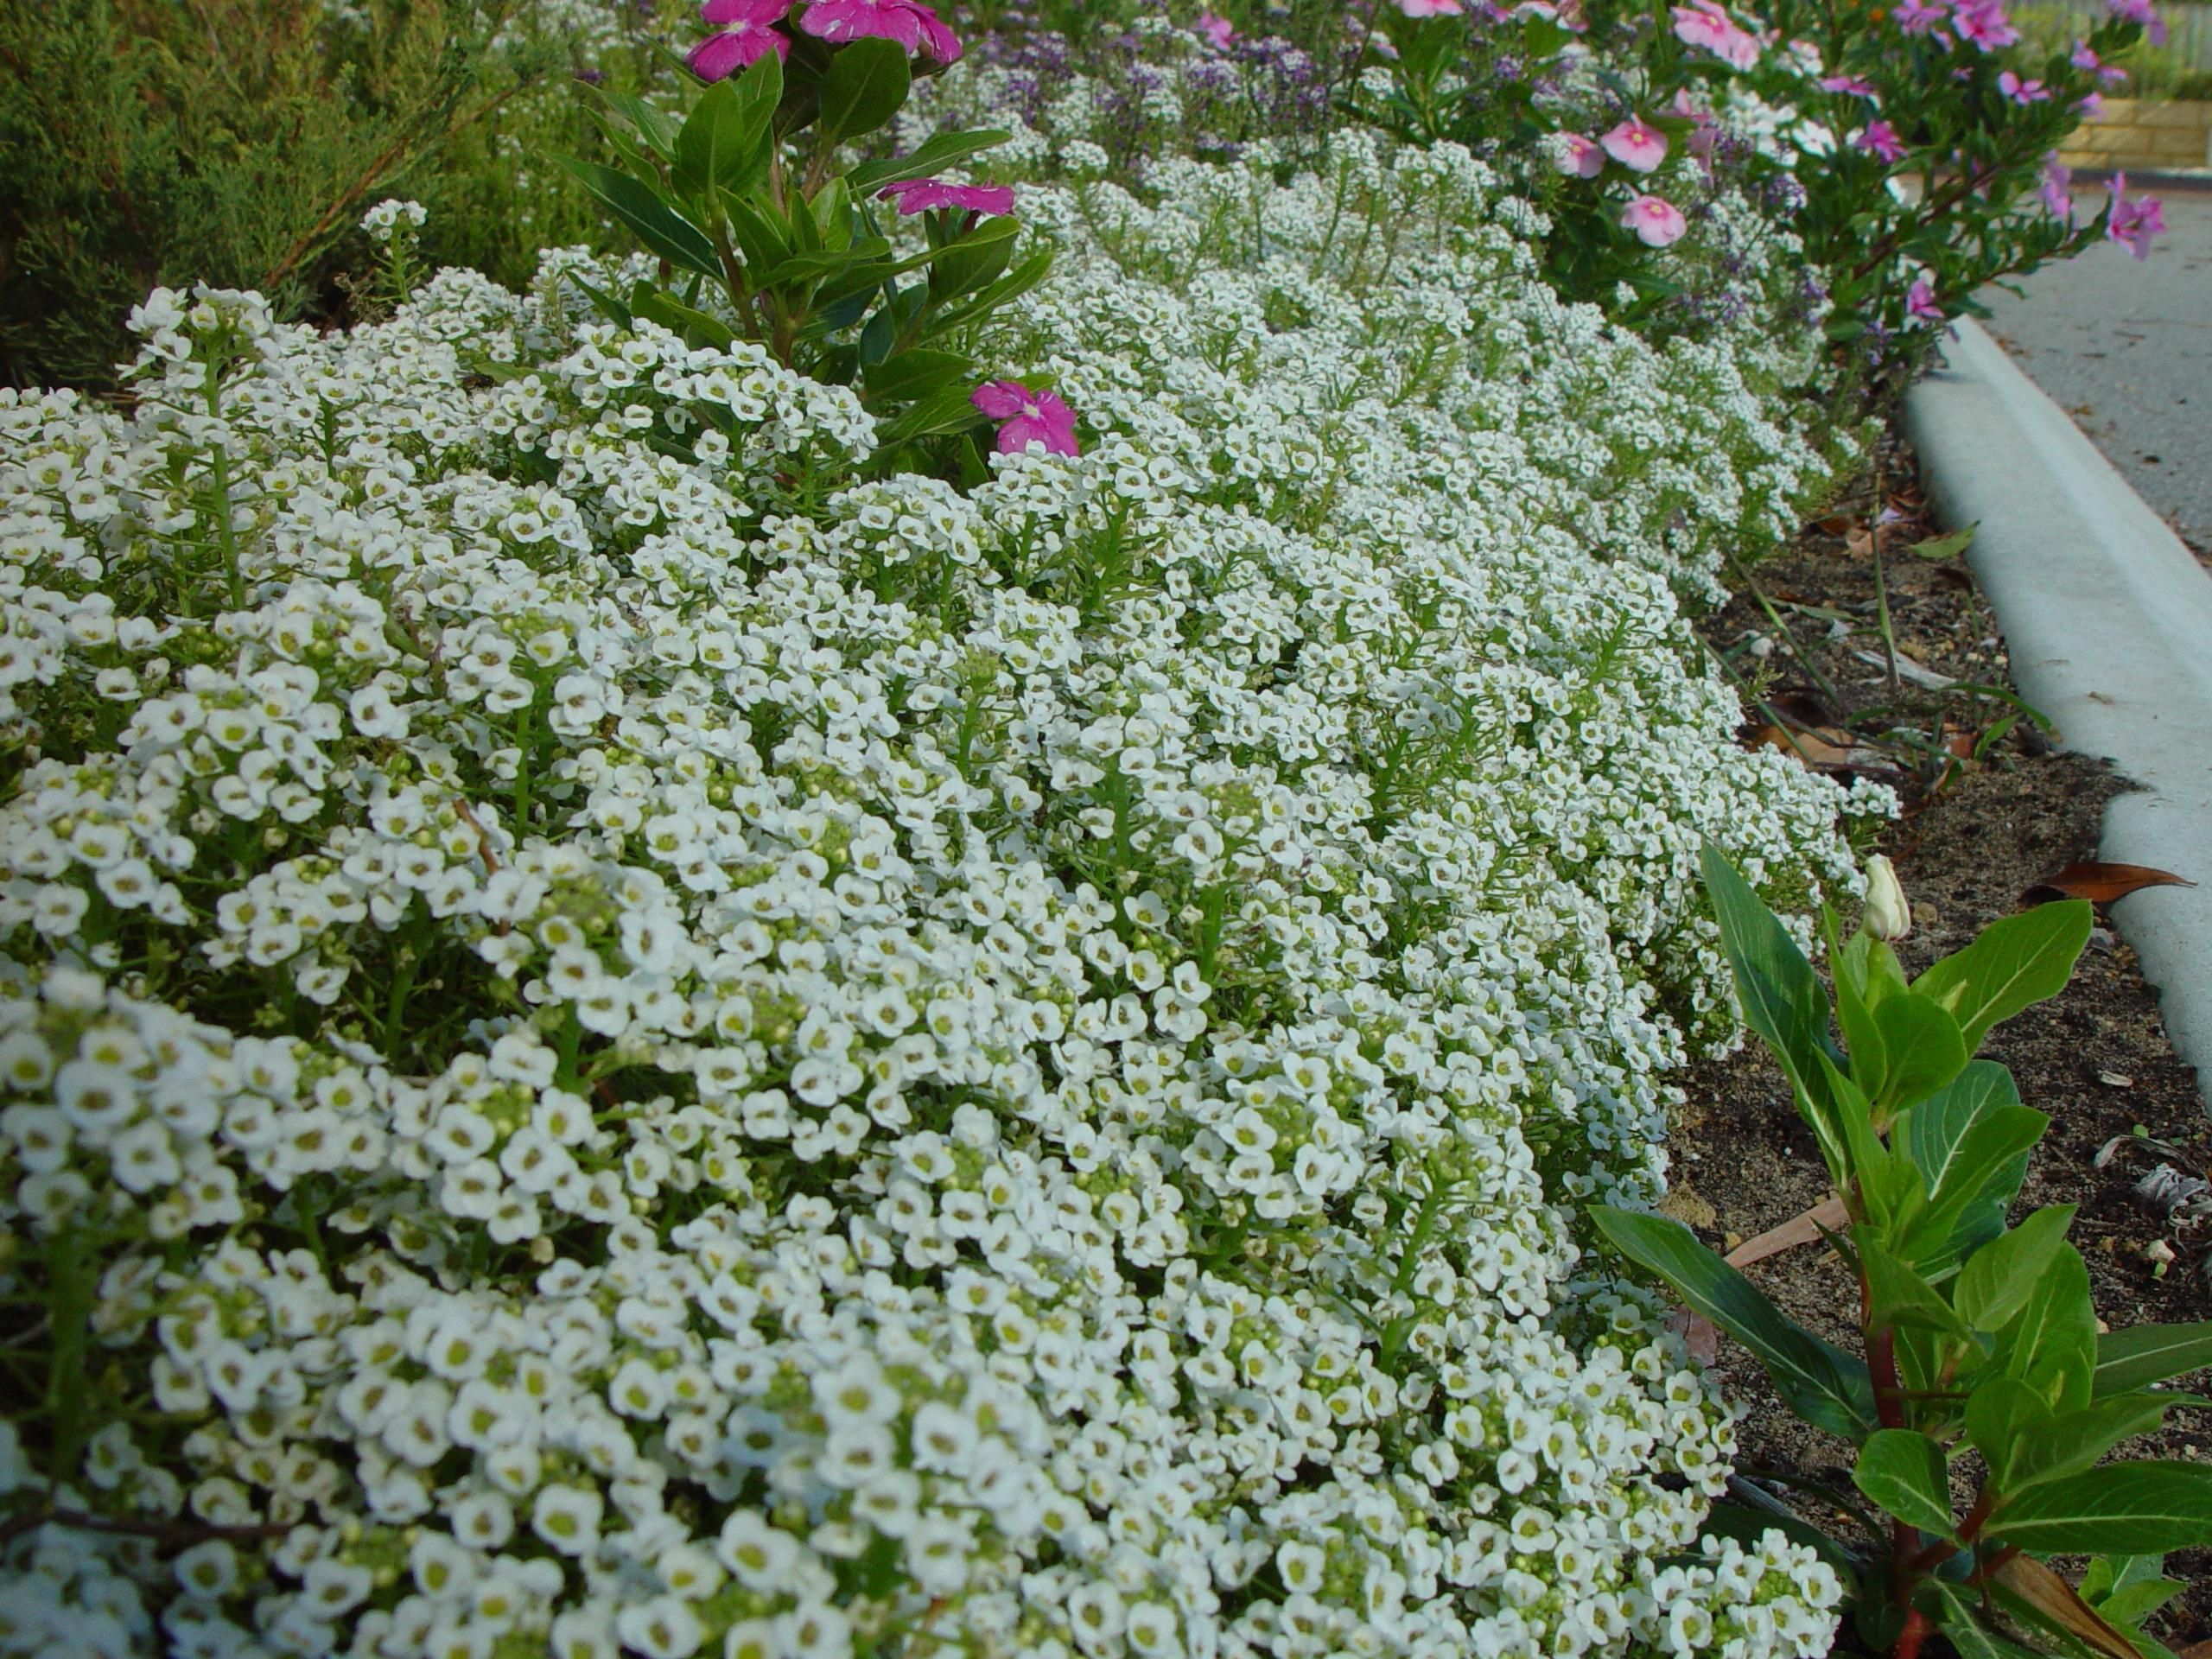 File:Bank of little white flowers.jpg - Wikimedia Commons